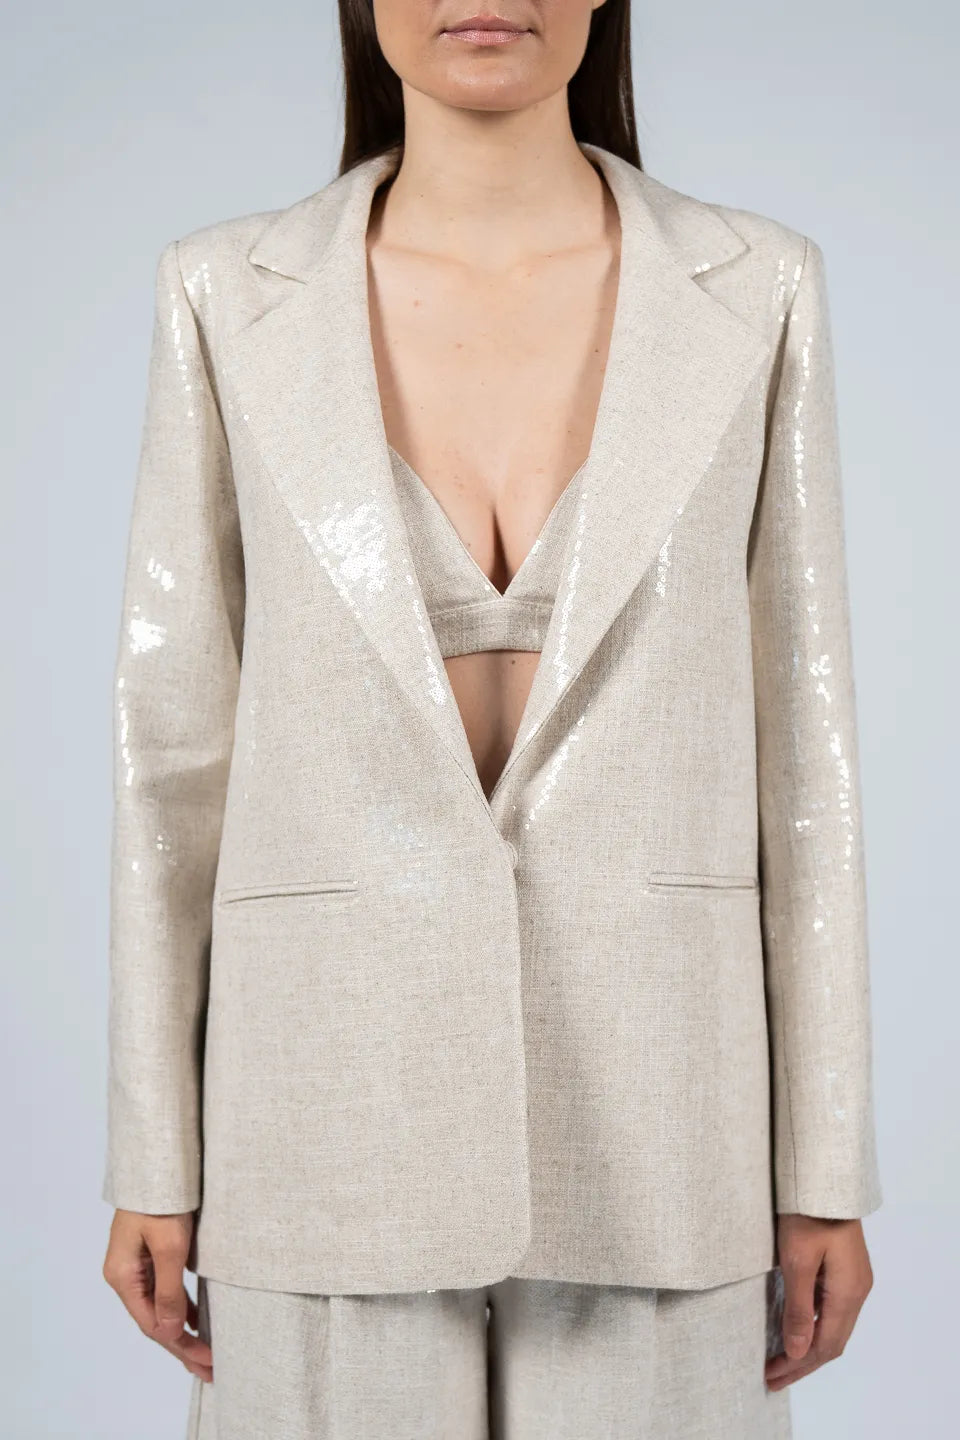 Shop online trendy Beige Women blazers, Jacket from Federica Tosi Fashion designer. Product gallery 1